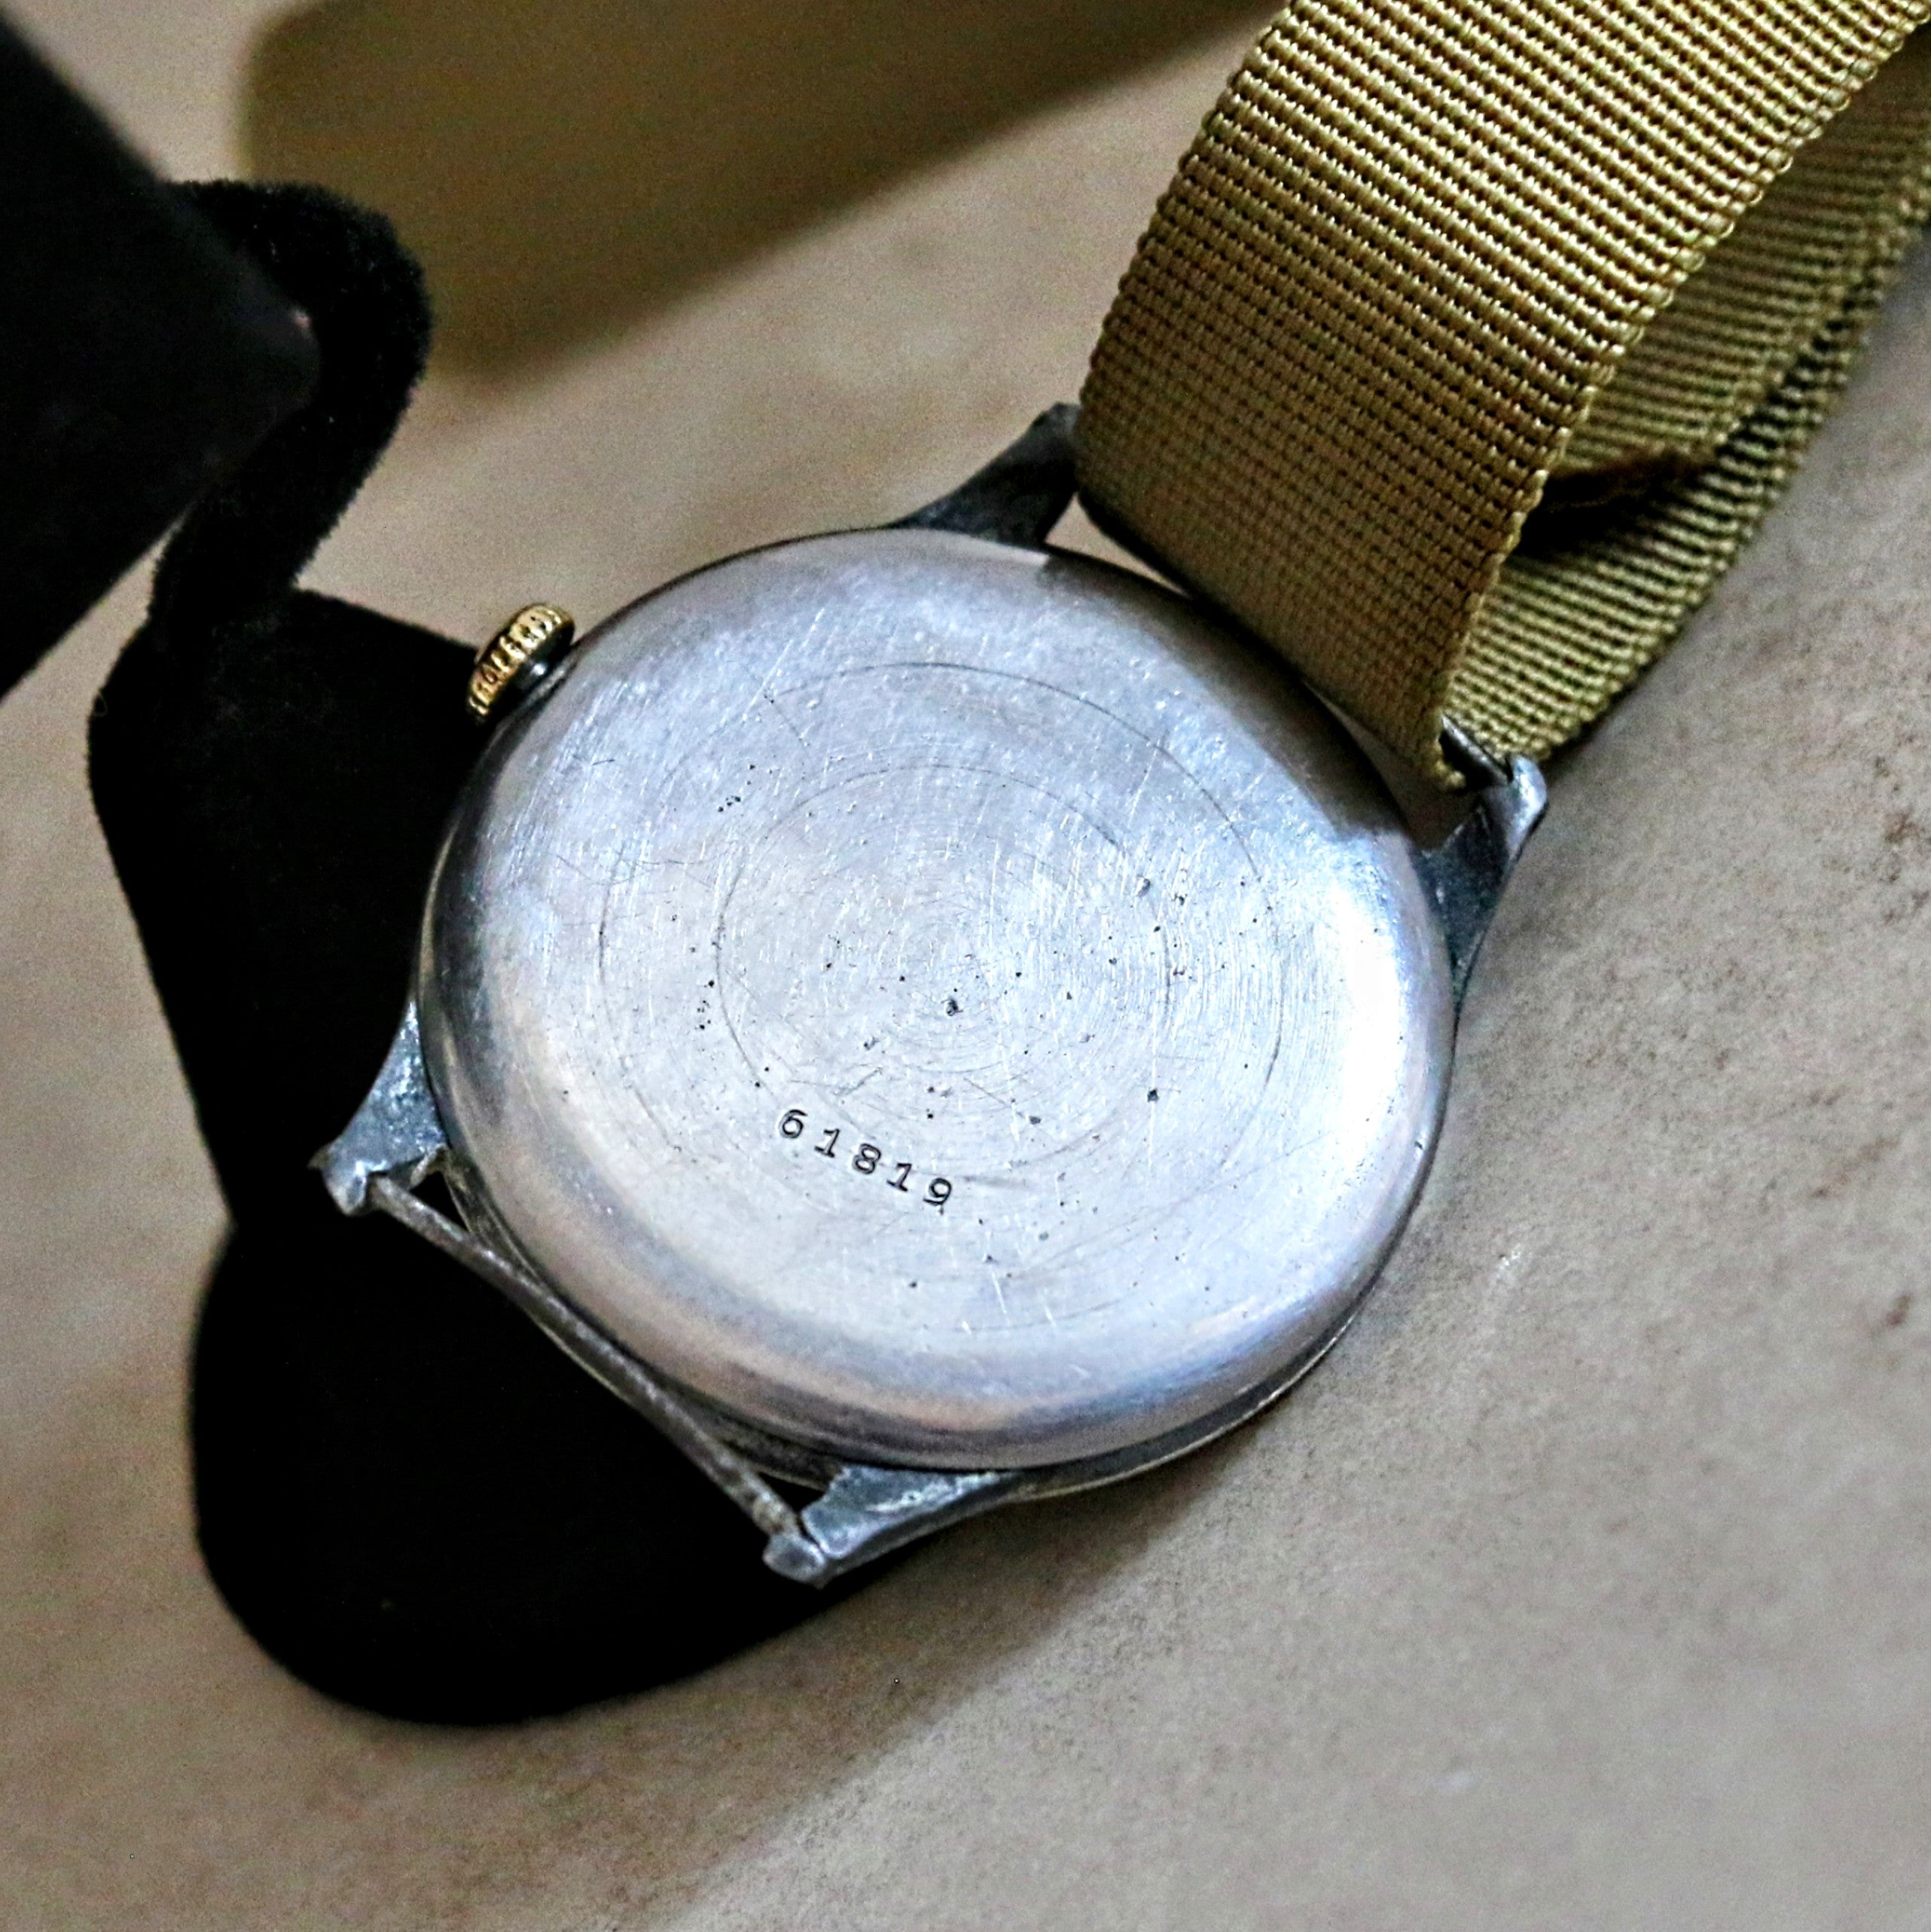 GLYCINE Bienne – Geneve Military Pilot Wristwatch 37mm Black Dial Watch